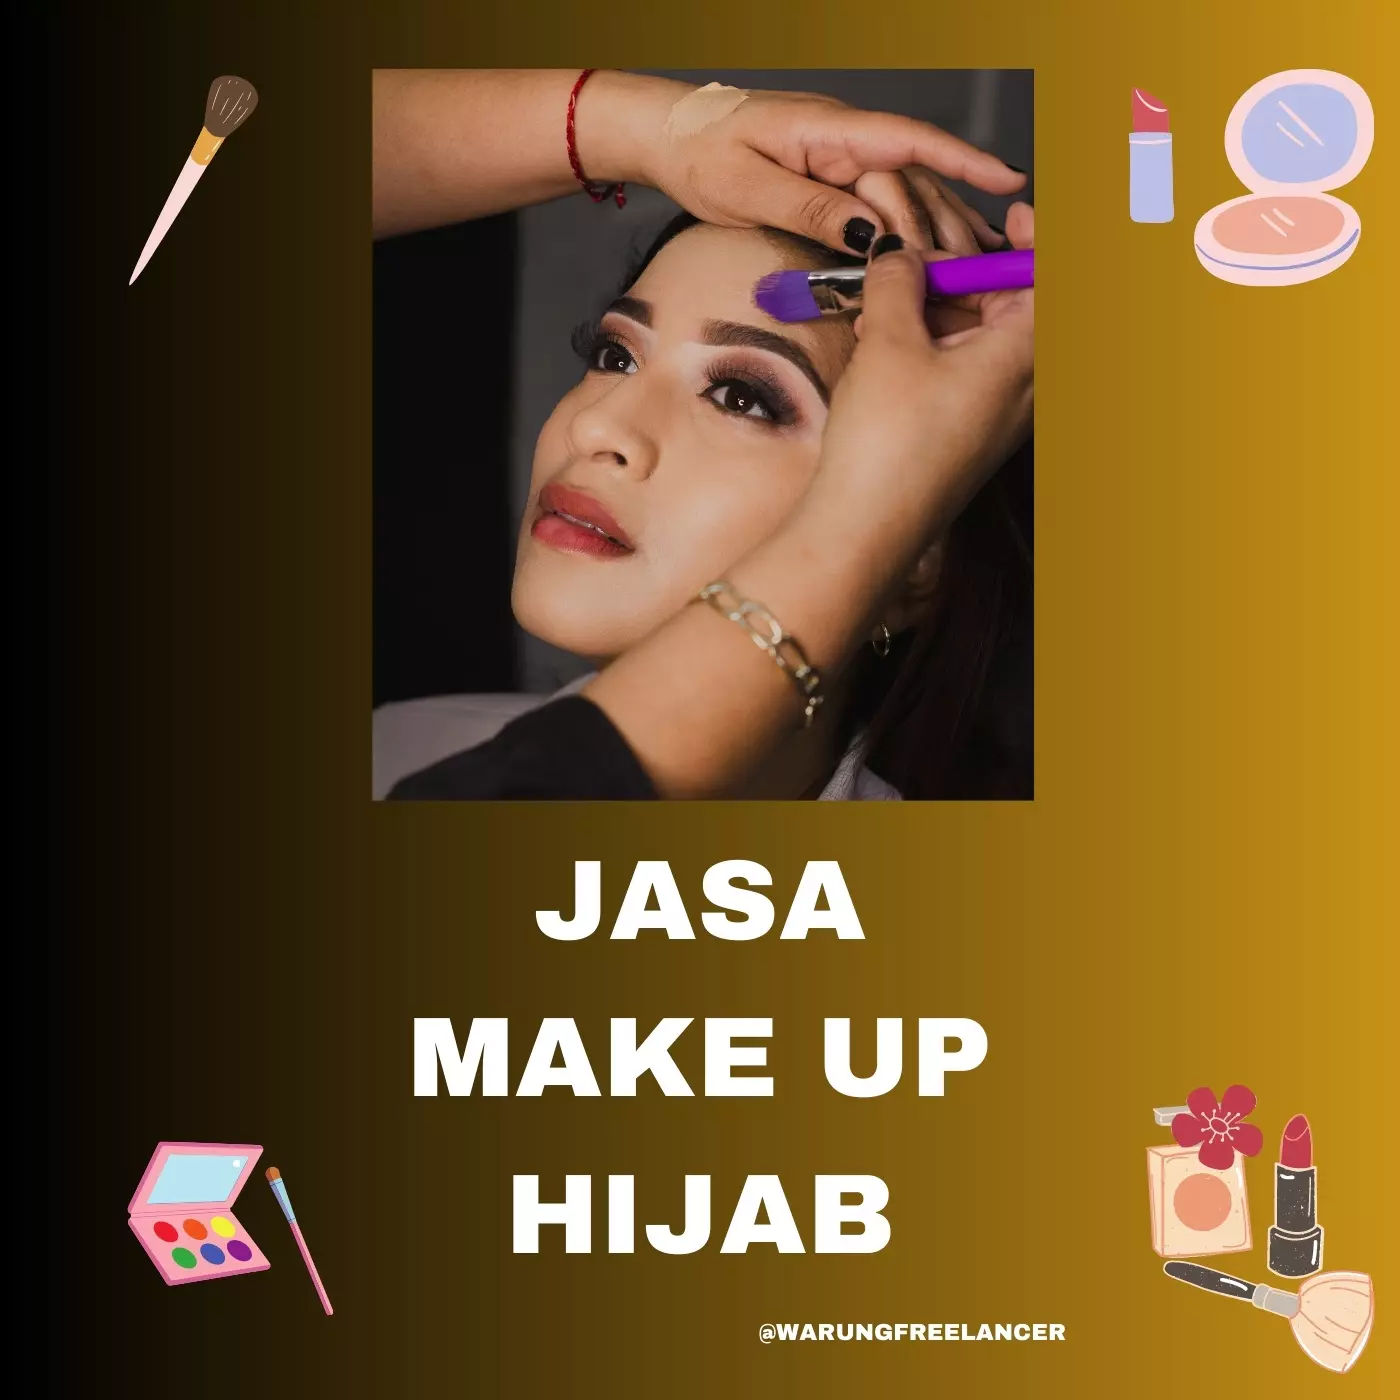 Hijab make-up Services